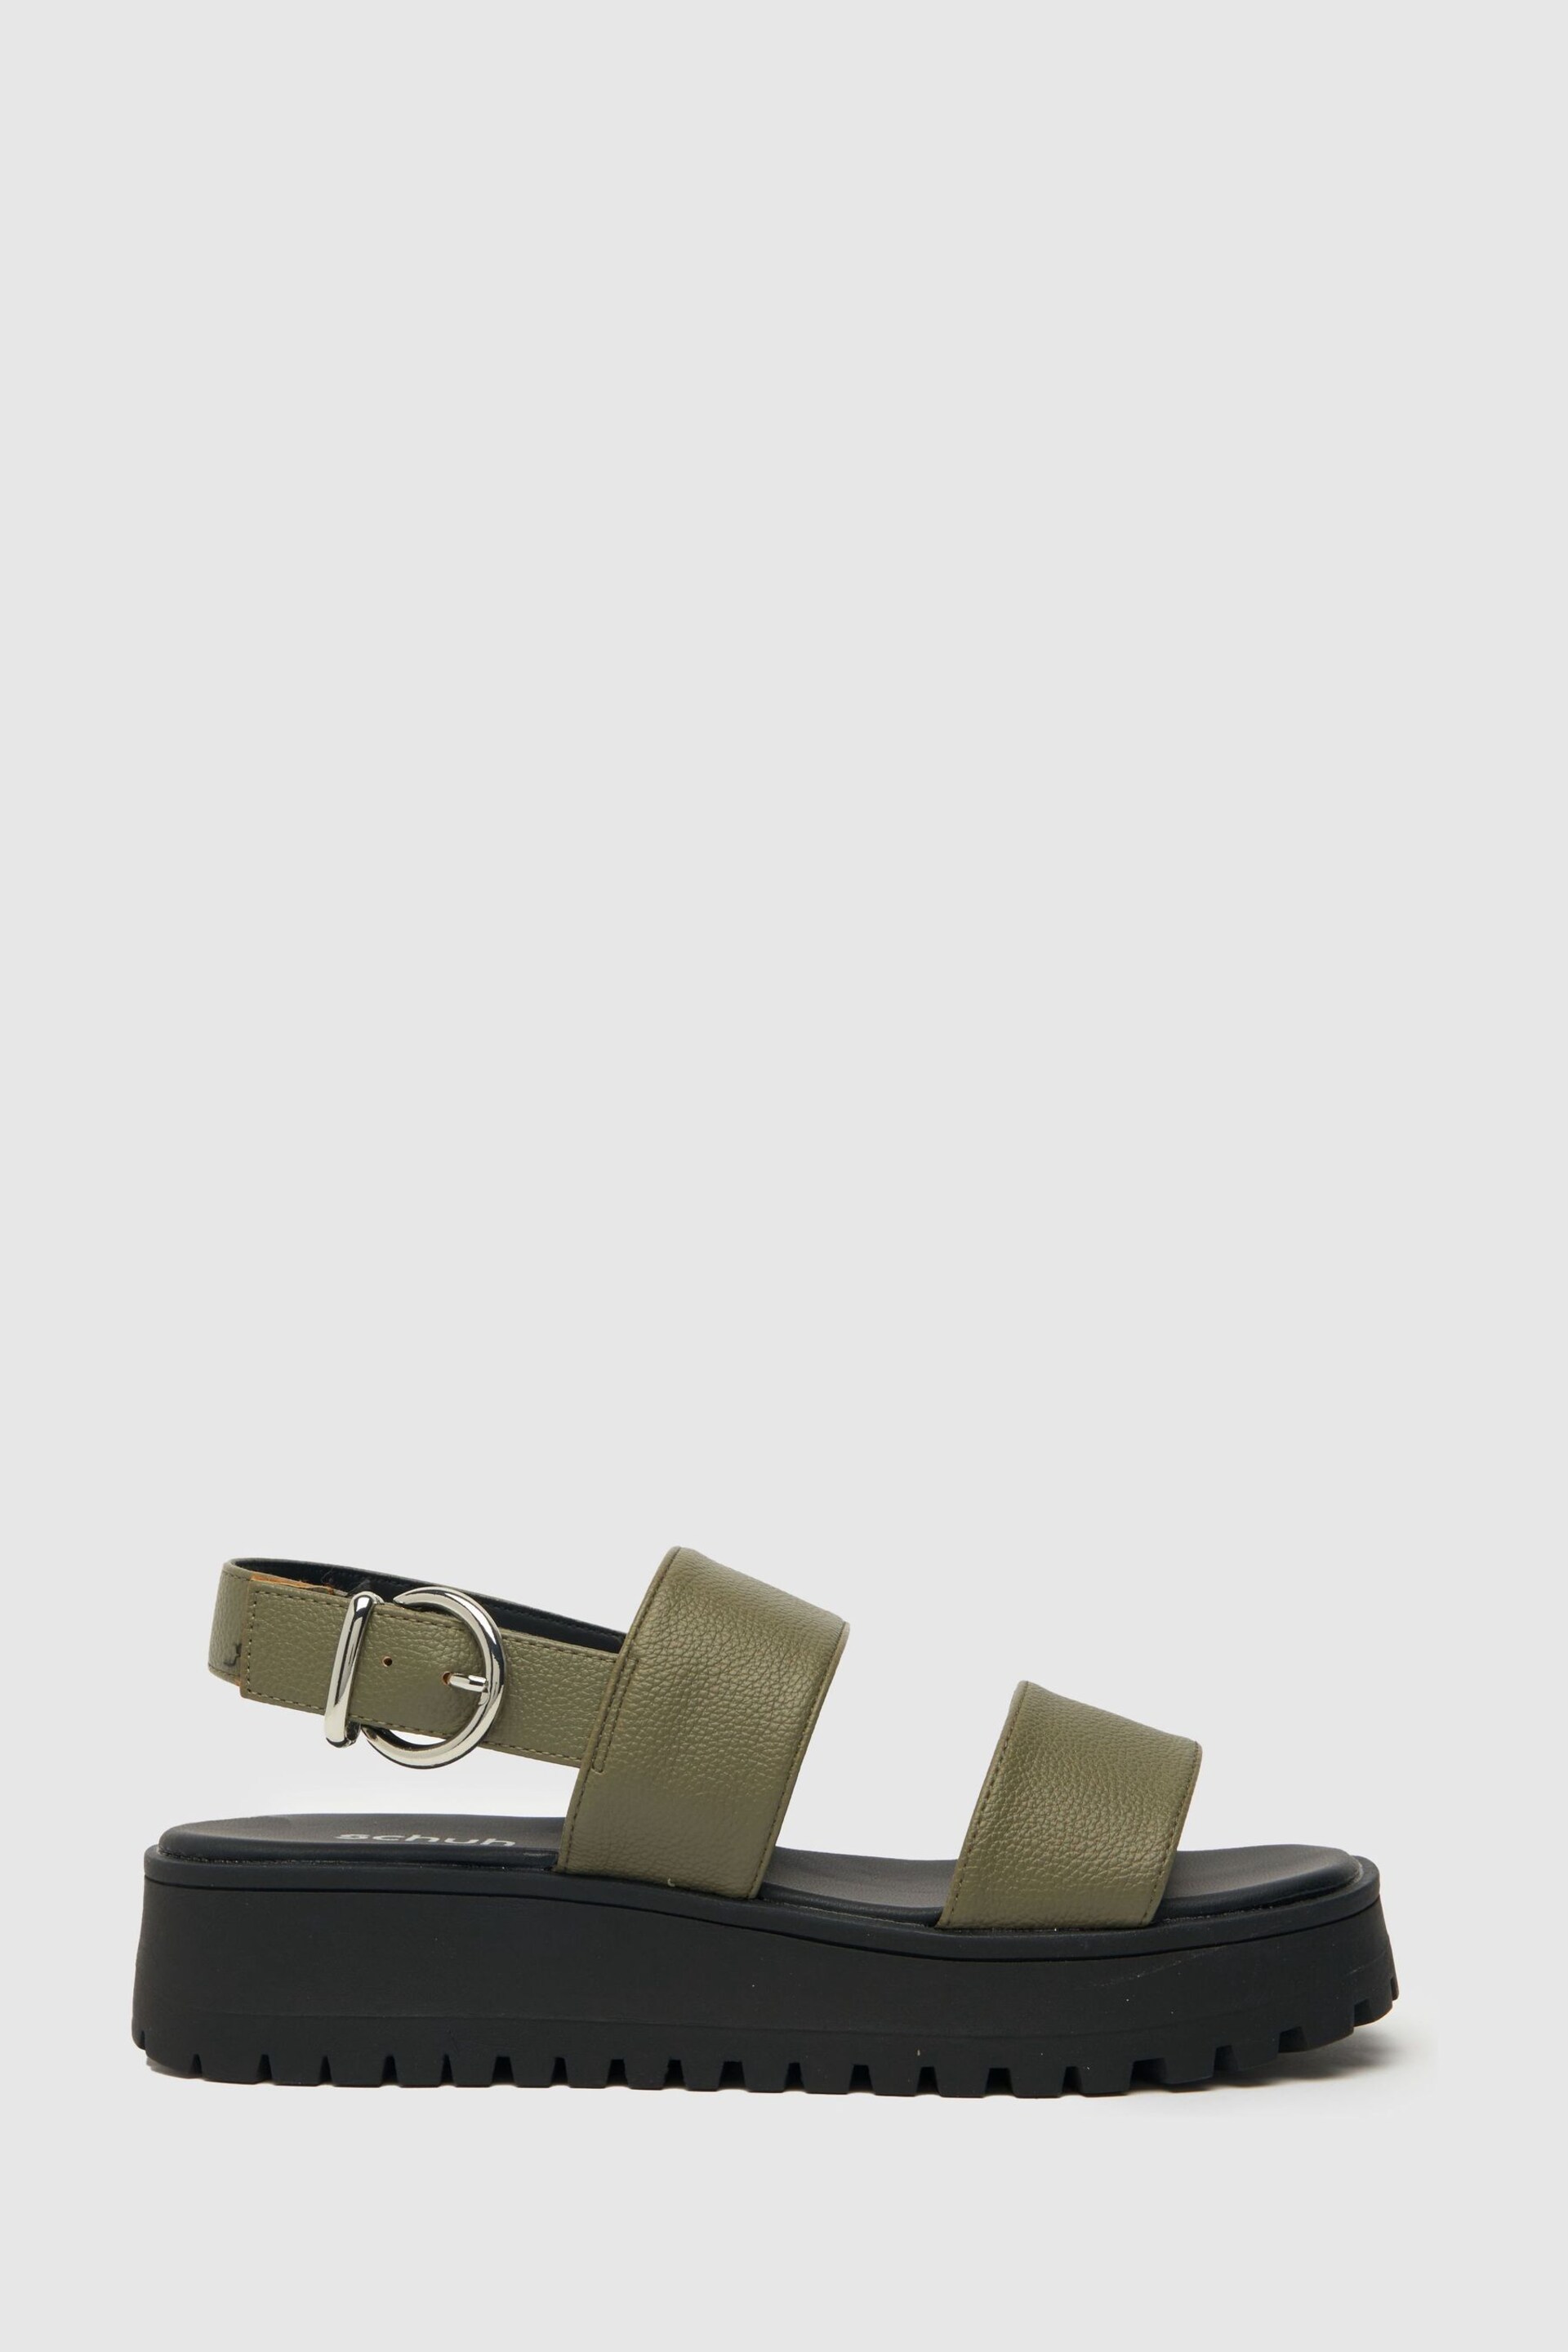 Schuh Tanya Chunky Flatform Sandals - Image 1 of 4